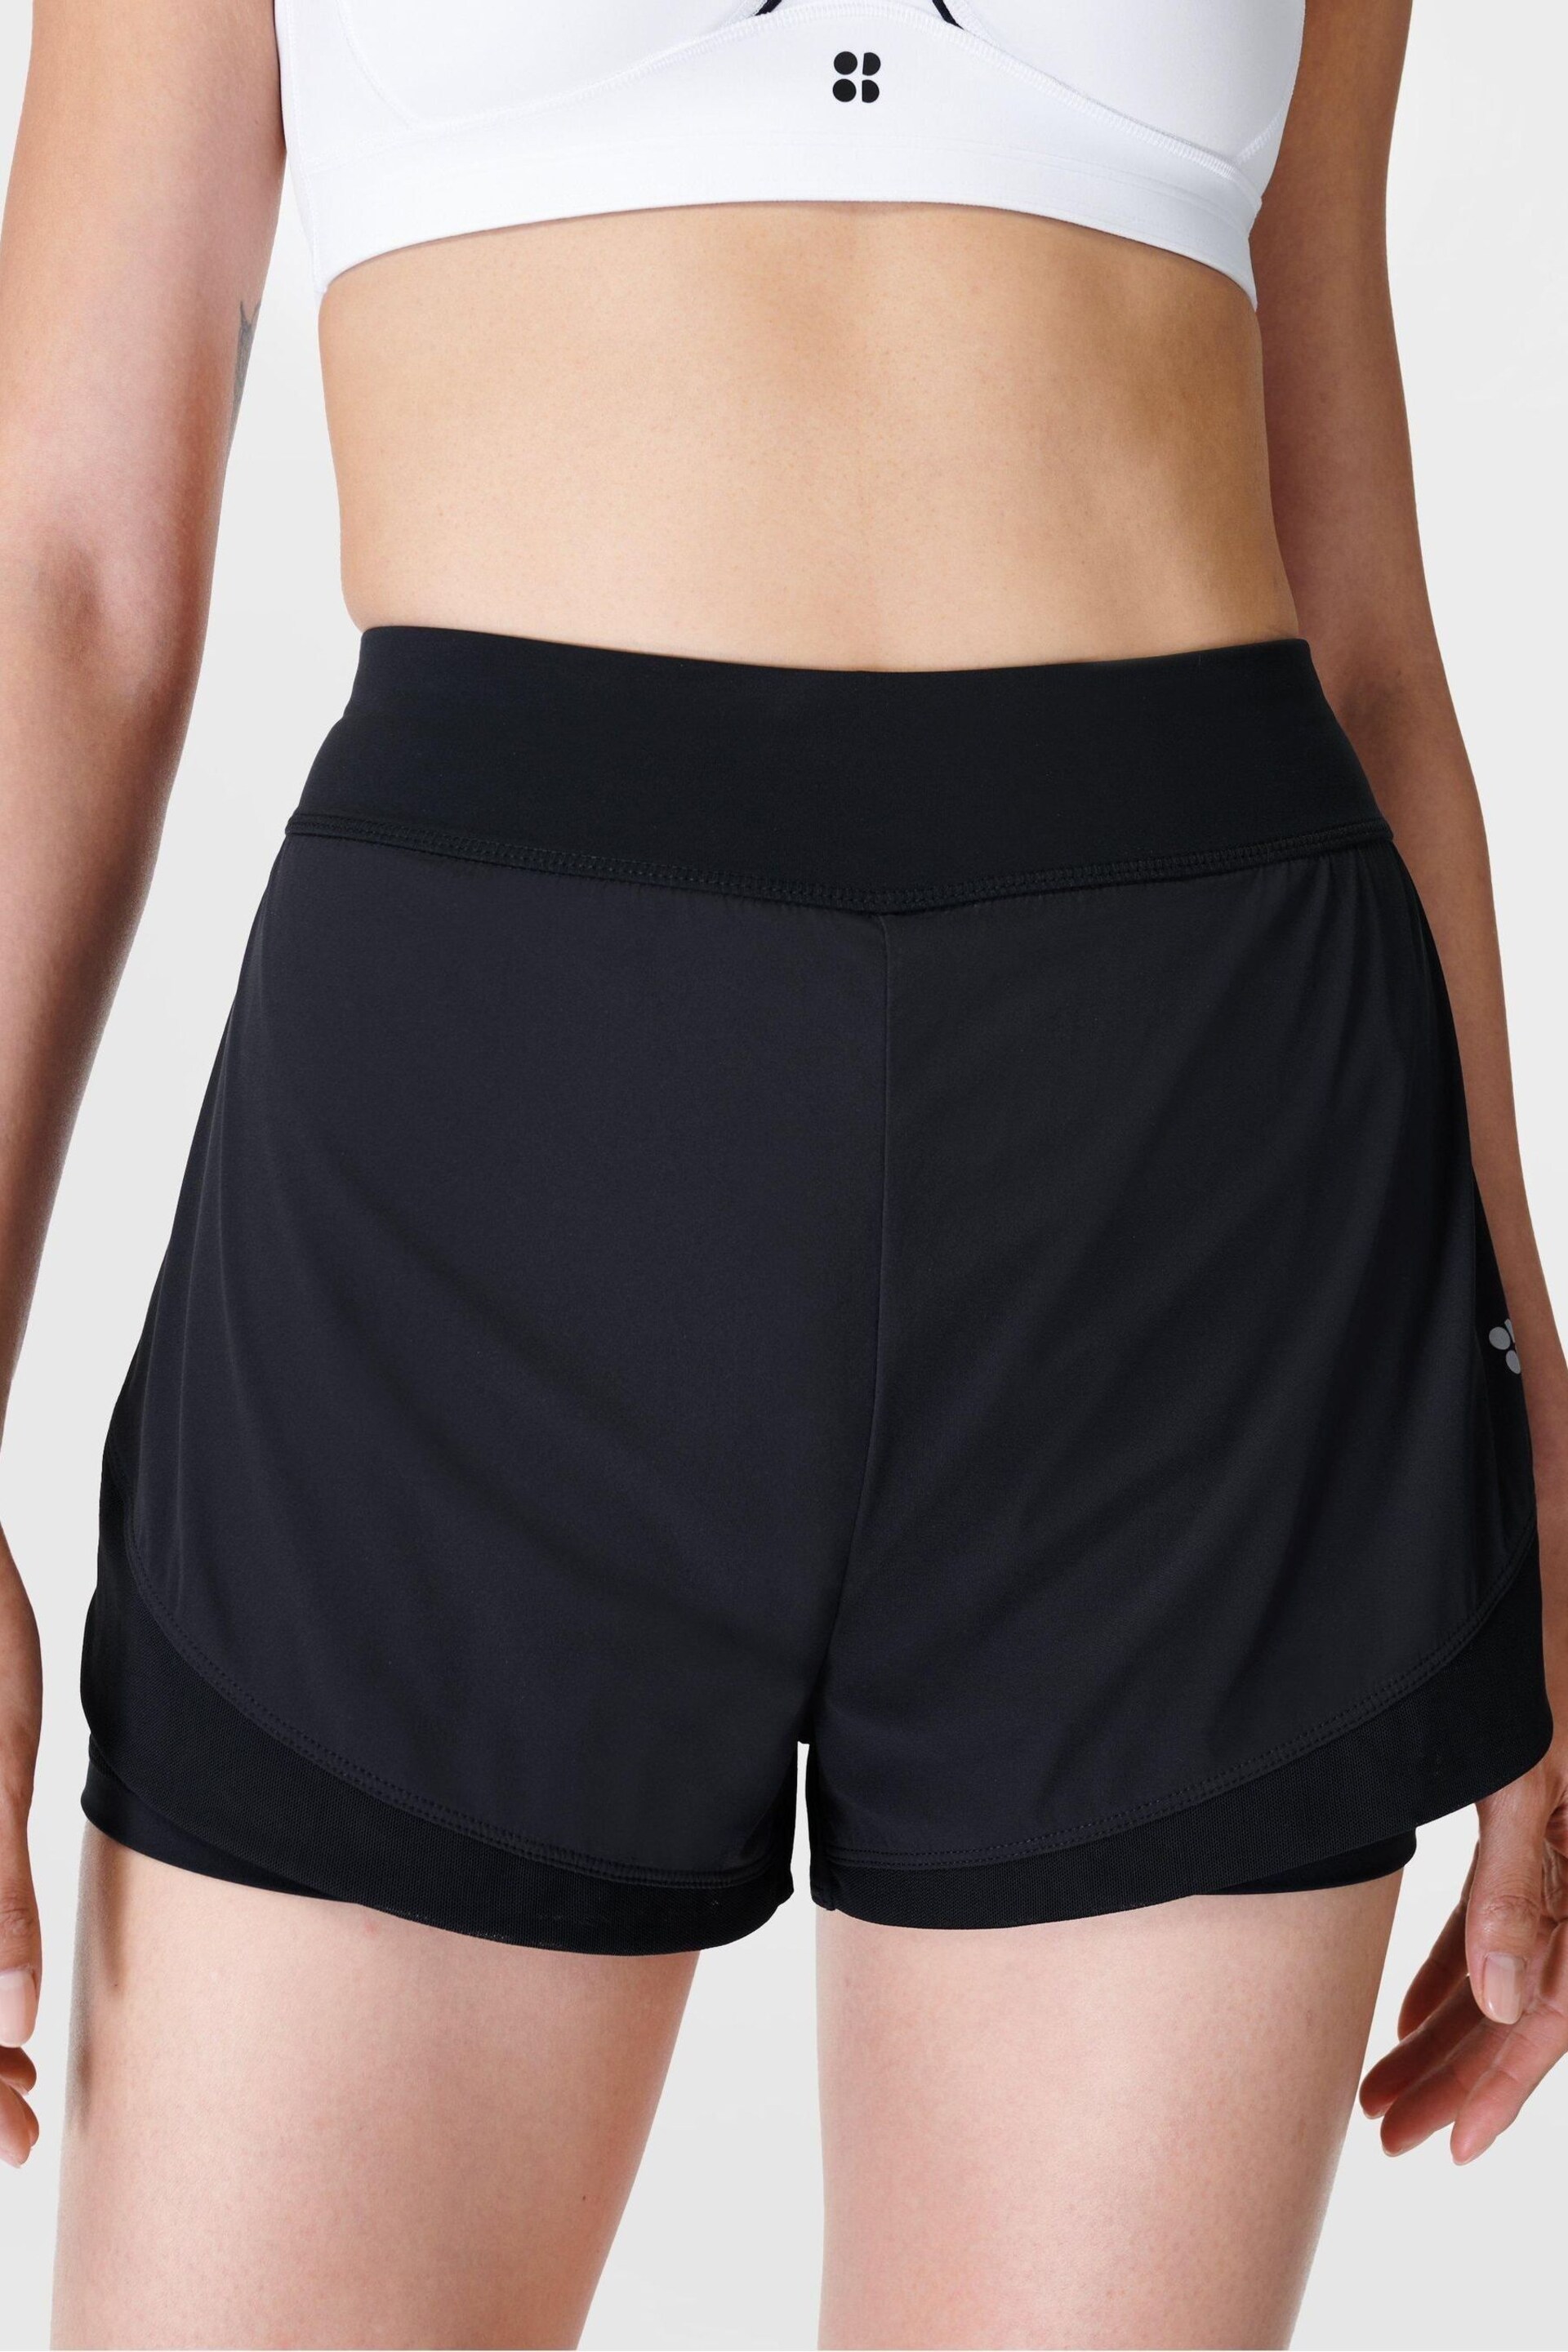 Sweaty Betty Black Tempo Run Shorts - Image 1 of 8